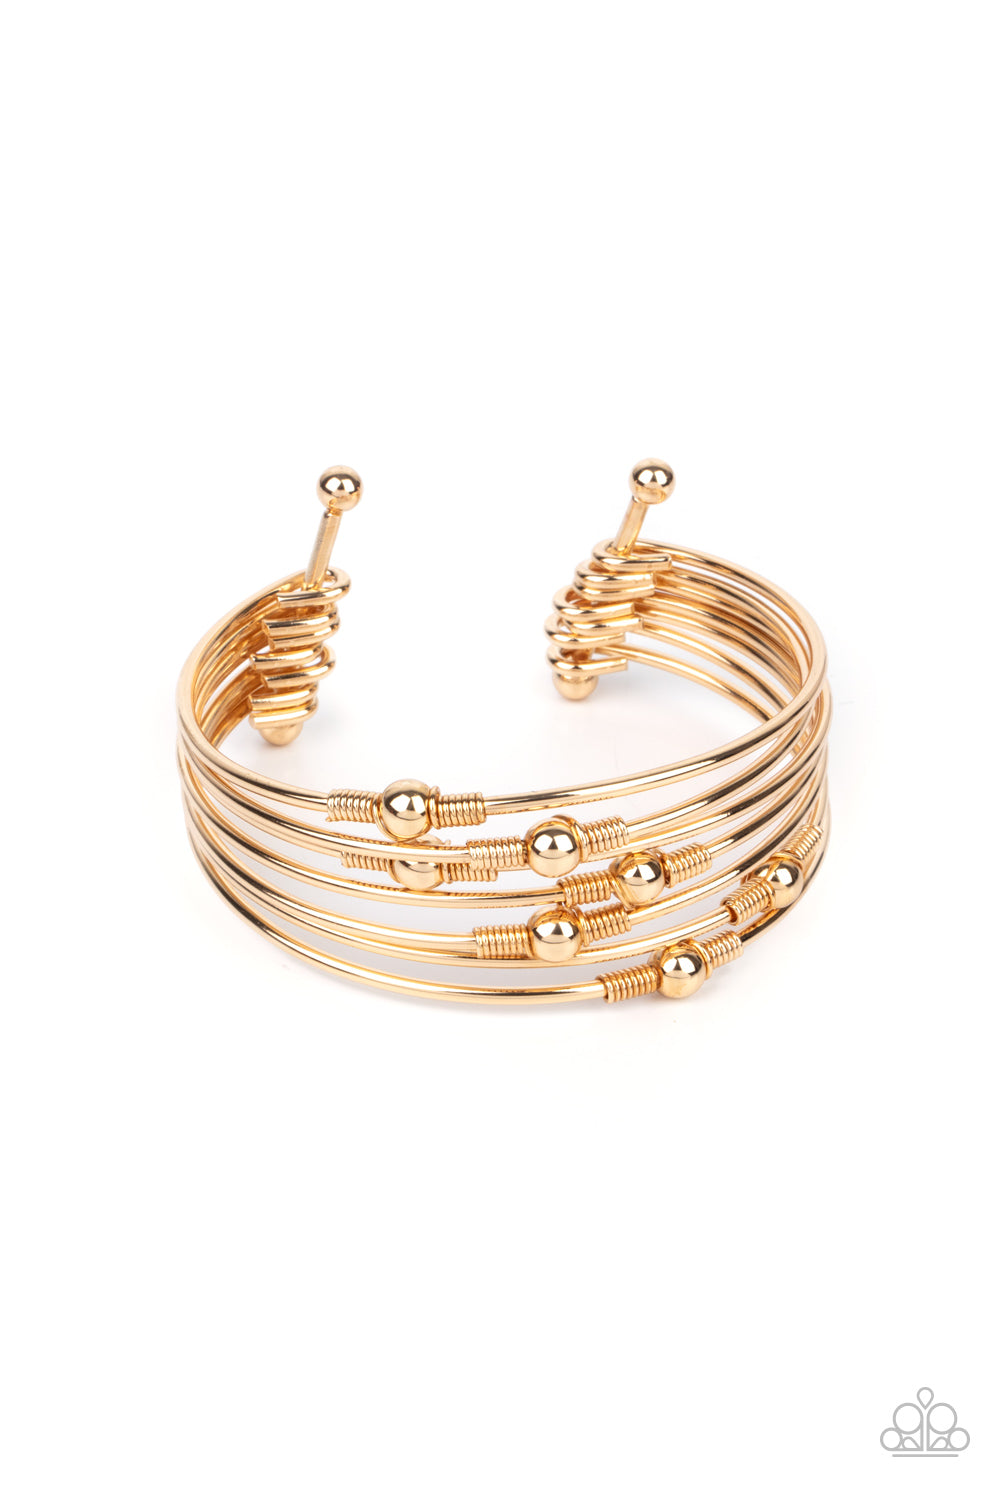 Industrial Intricacies - Gold Cuff Bracelet - Princess Glam Shop